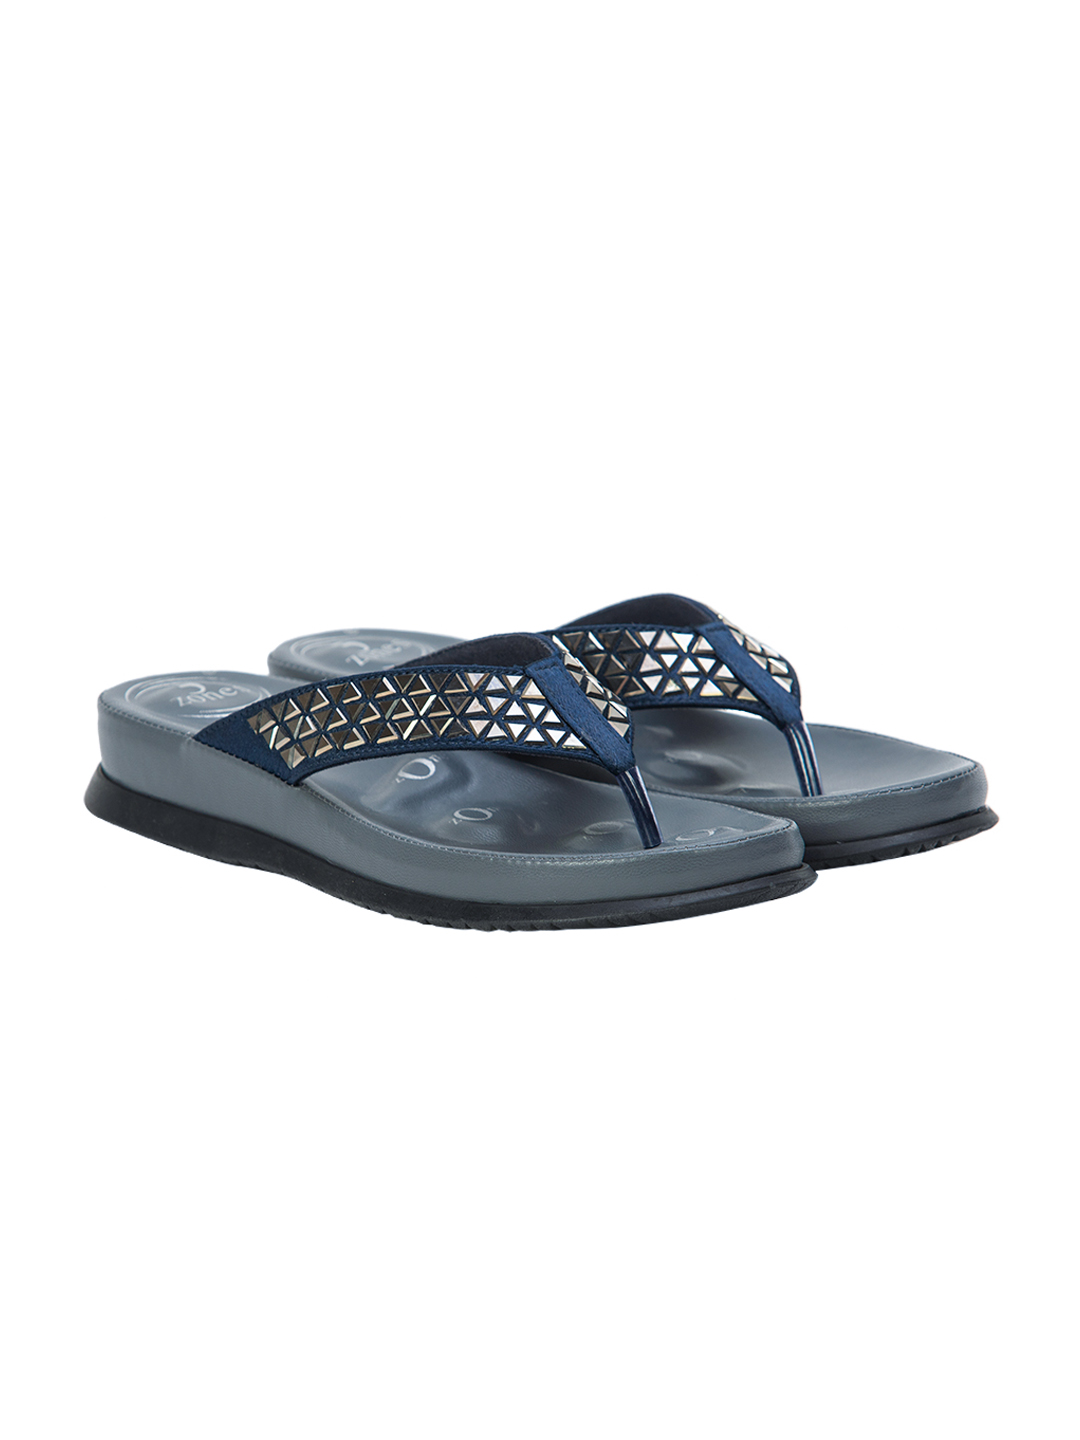 Buy Von Wellx Germany Comfort Beam Blue Slippers Online in Rajasthan